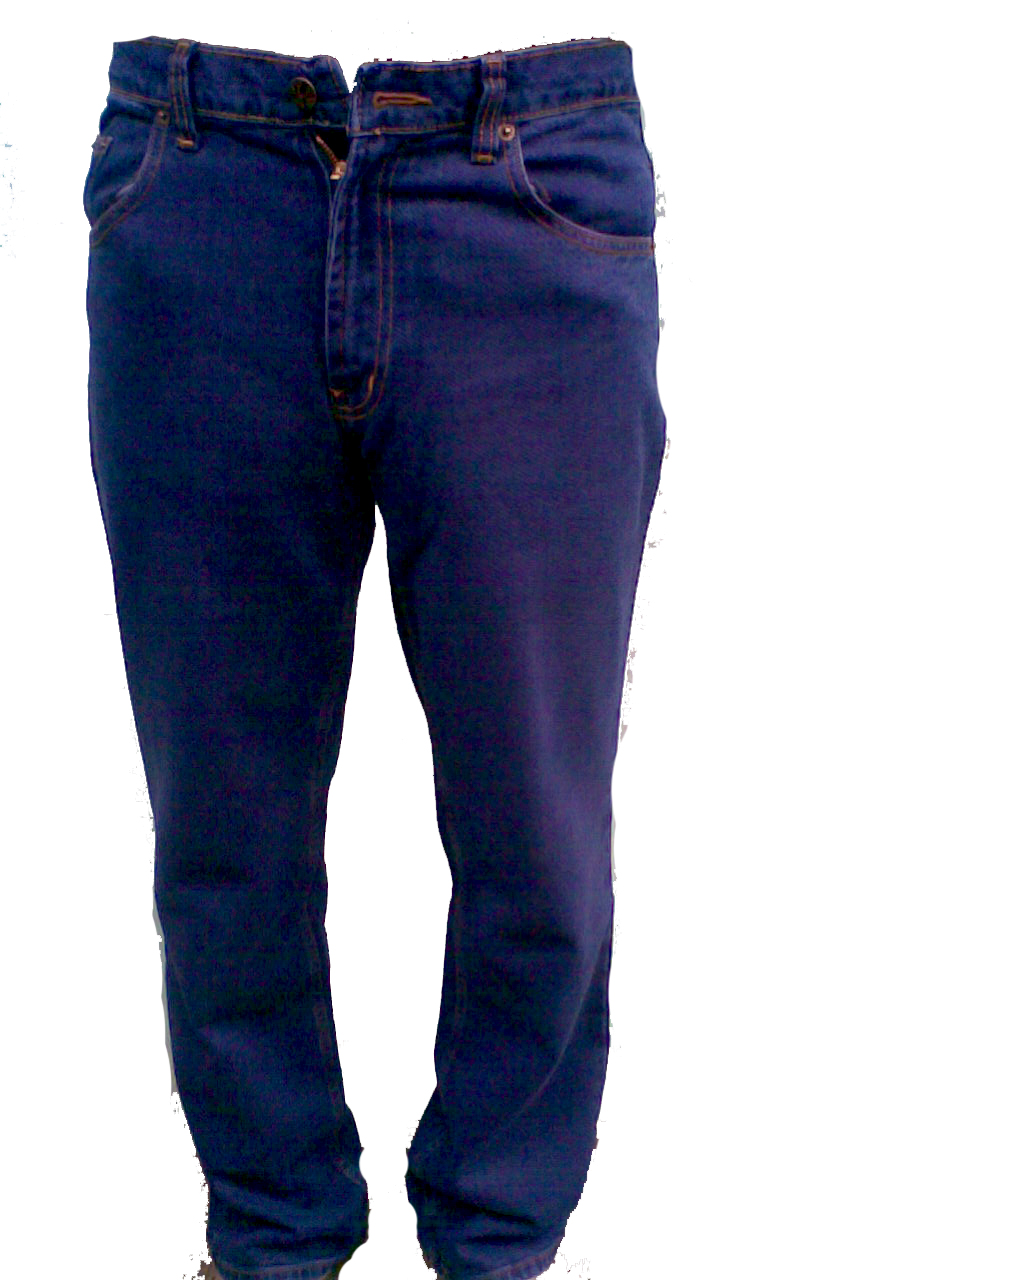 Celana jeans murah  Welcome To Konveksi Satuan